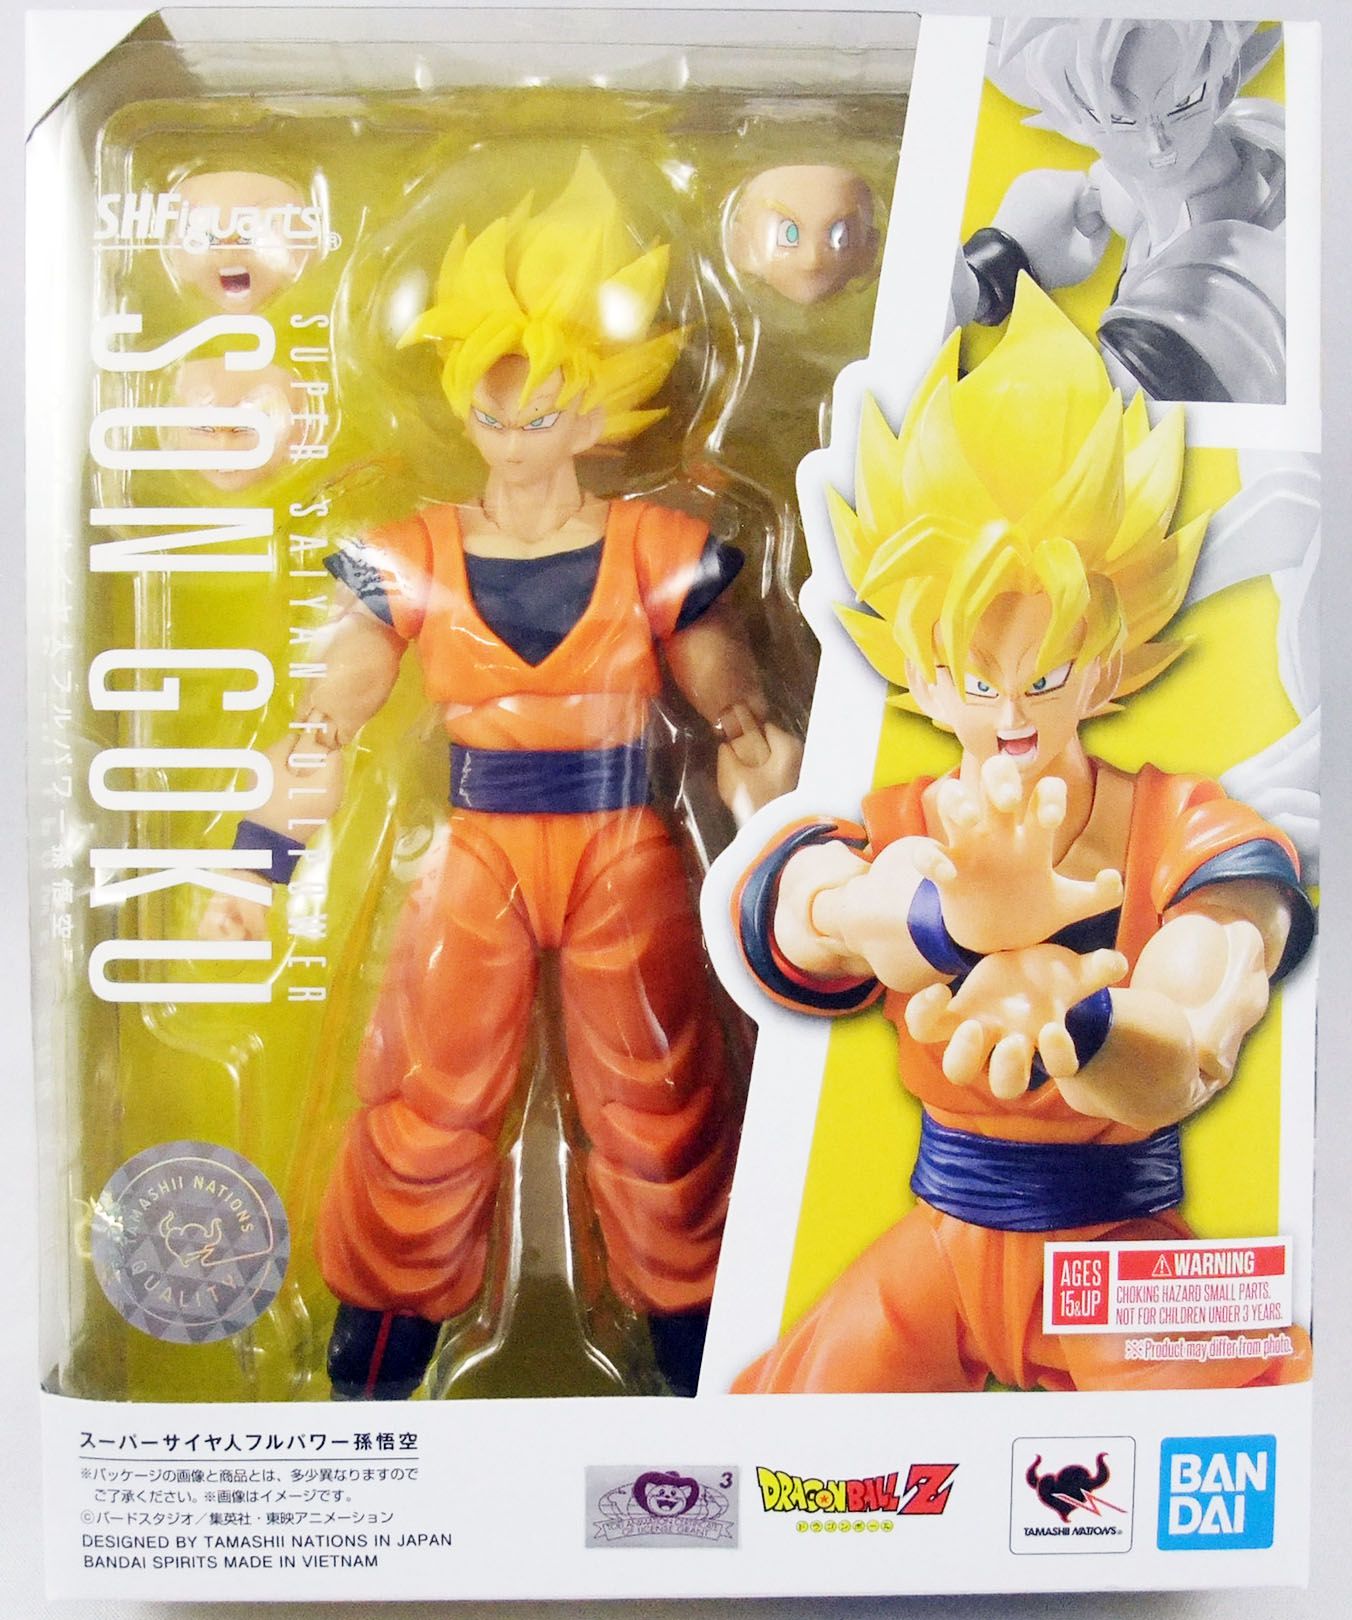 Original Bandai Dragon Ball Z S.H.Figuarts Son Goku SSJ Action Figures  Super Saiyan Battle Damage Legendary Toys Model Kid Gifts - AliExpress